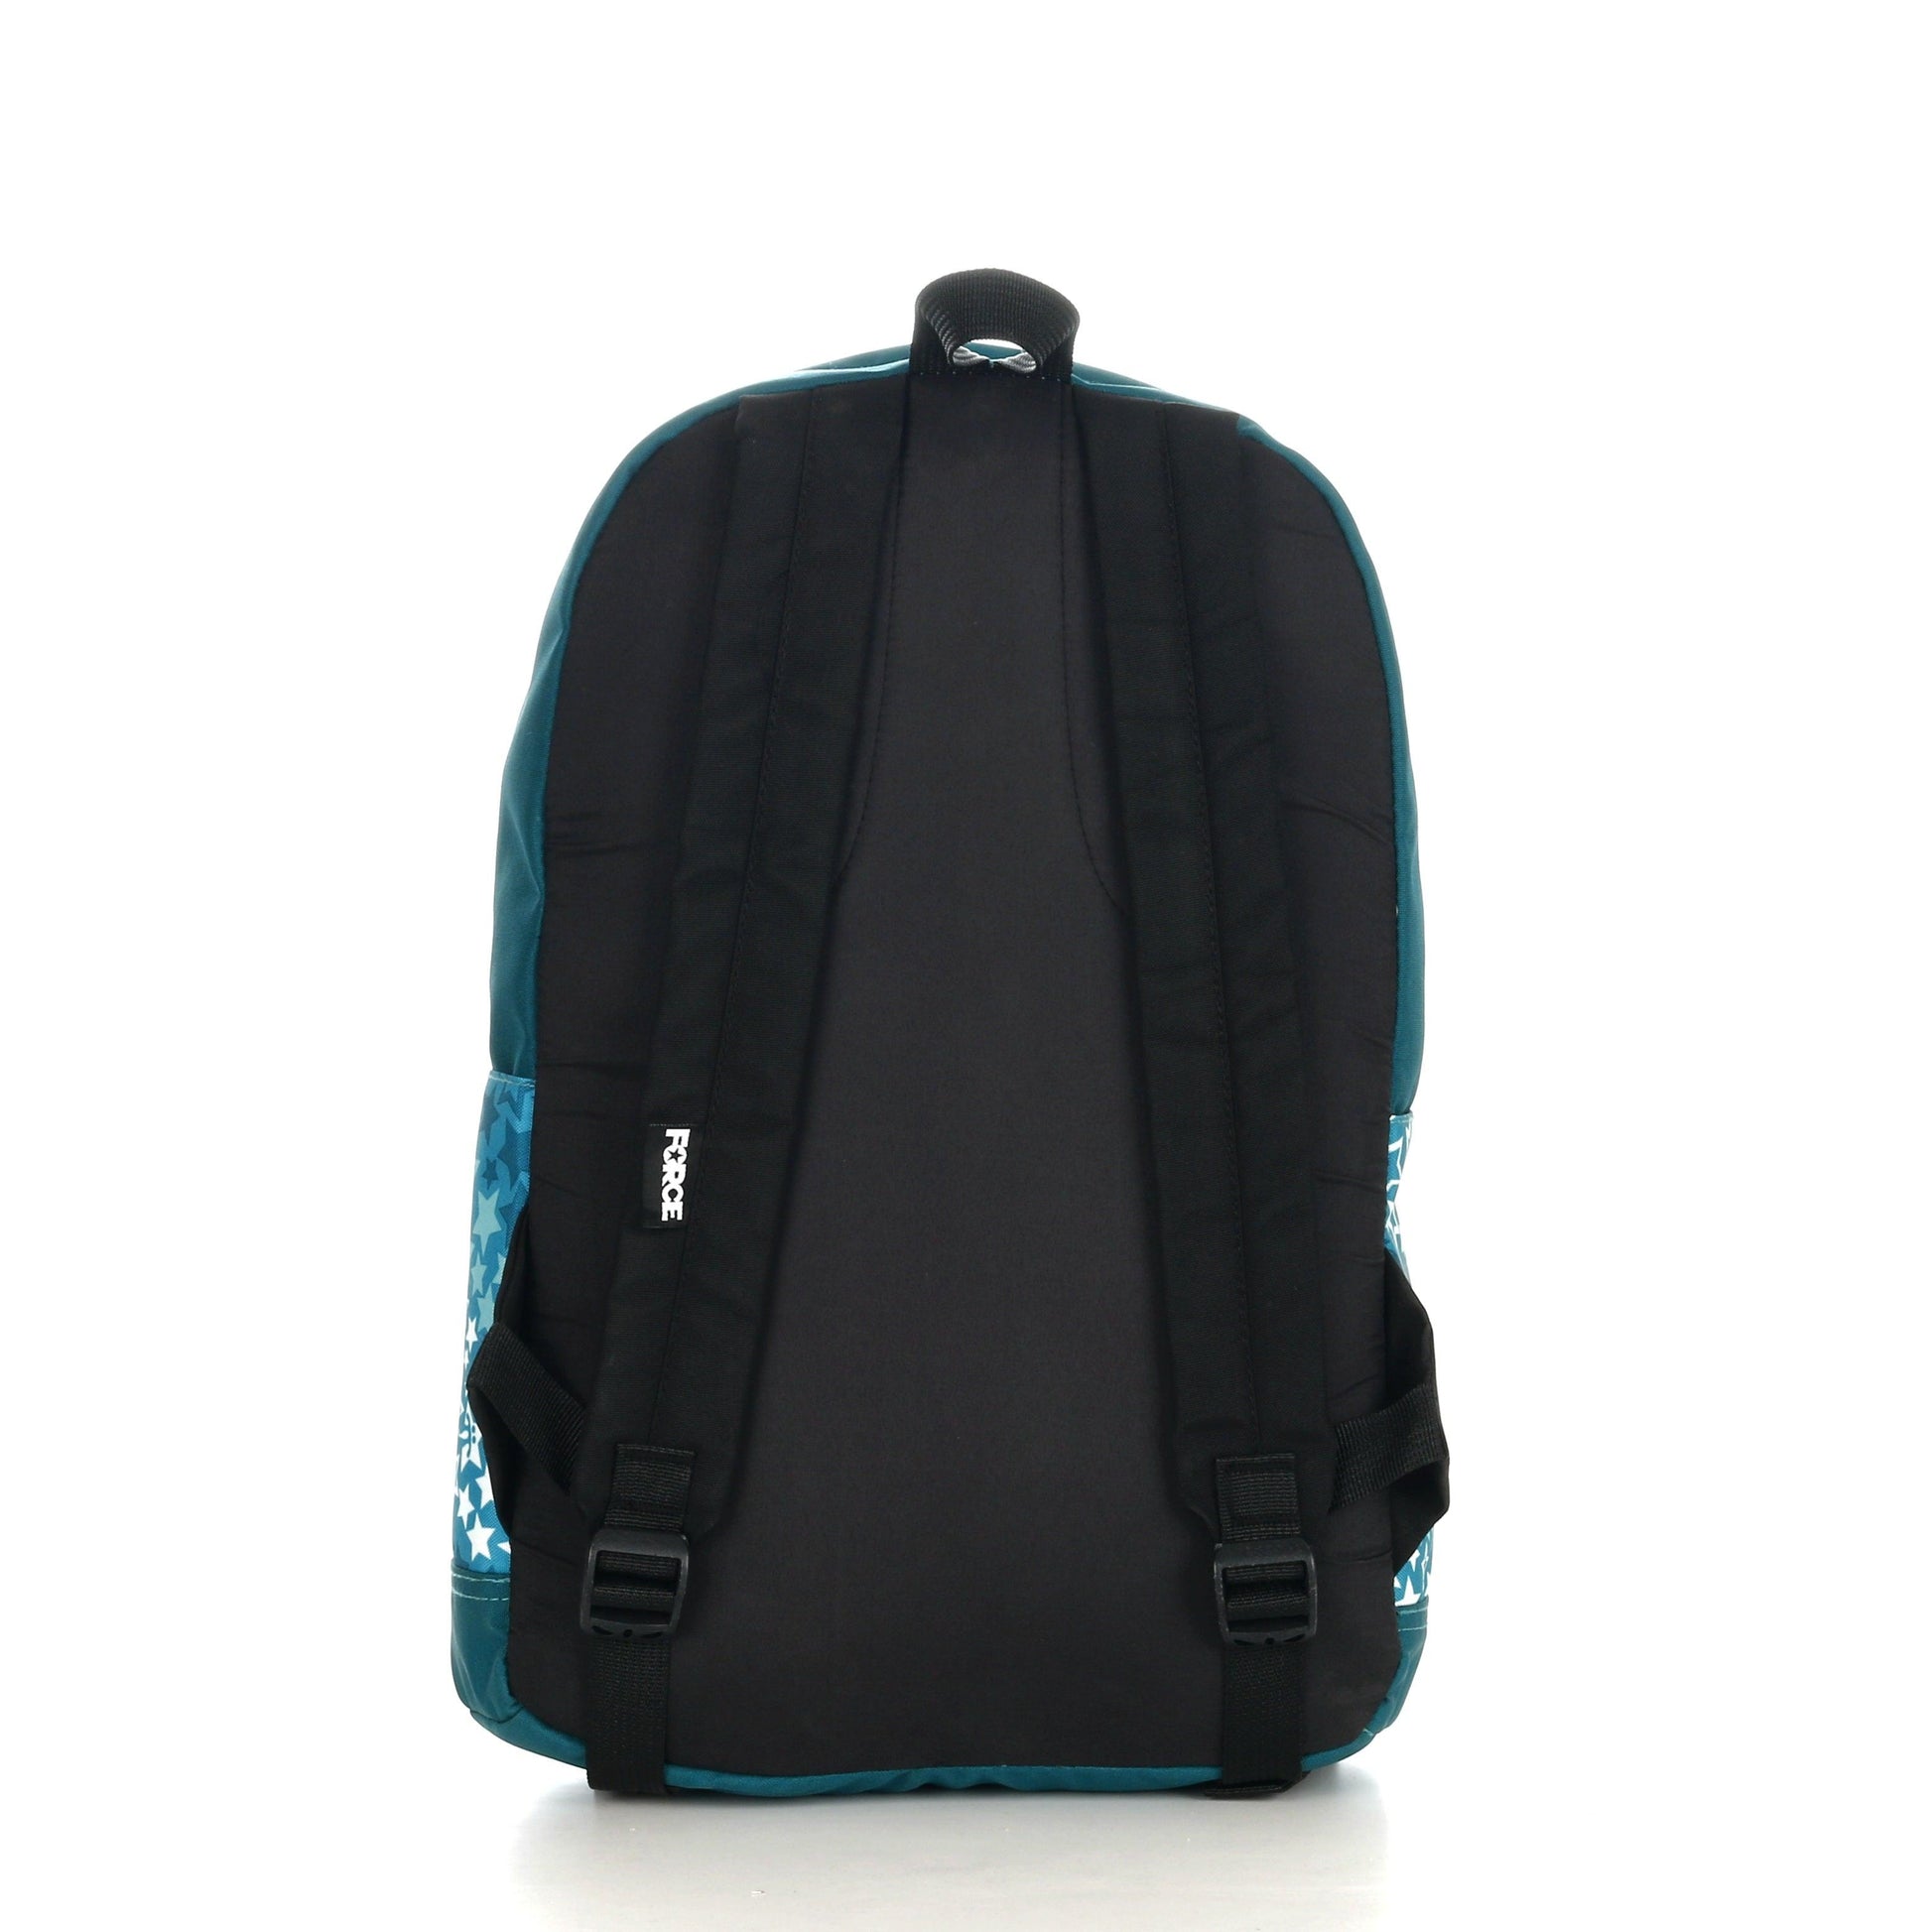 Force laptop backpack 15.6" - Teal Green - FTG17 - FORCE STORES